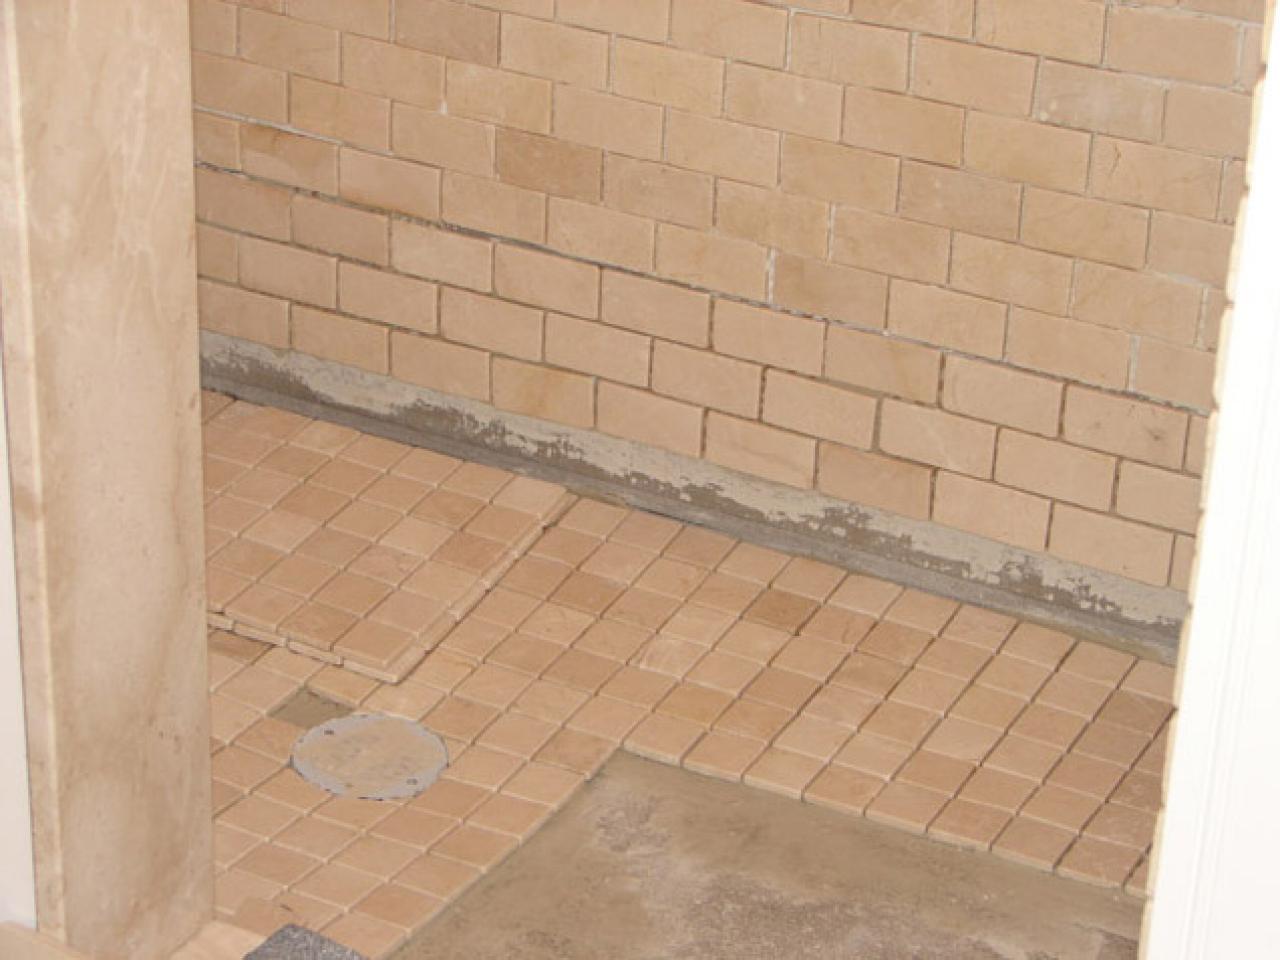 Install Tile In A Bathroom Shower, Tile For Shower Walls And Floor